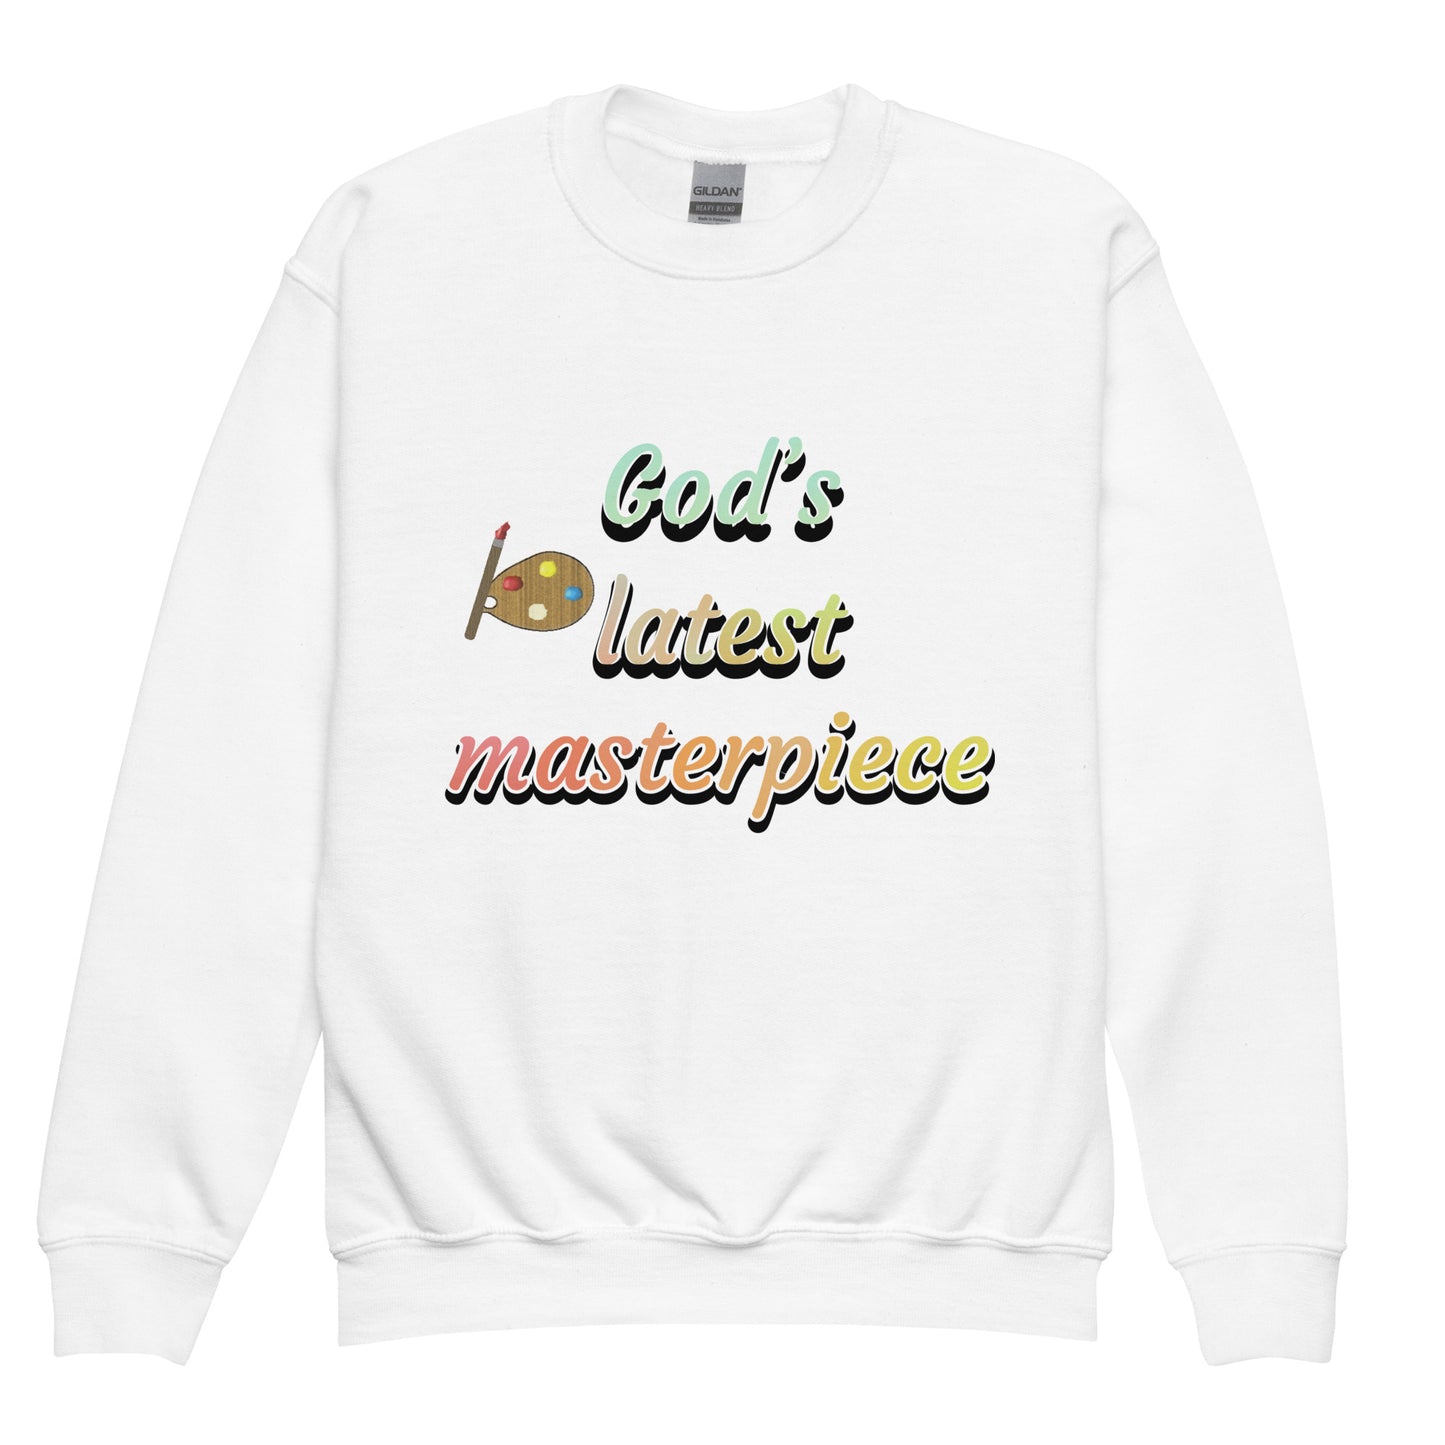 God's Latest Masterpiece Kids Sweatshirt